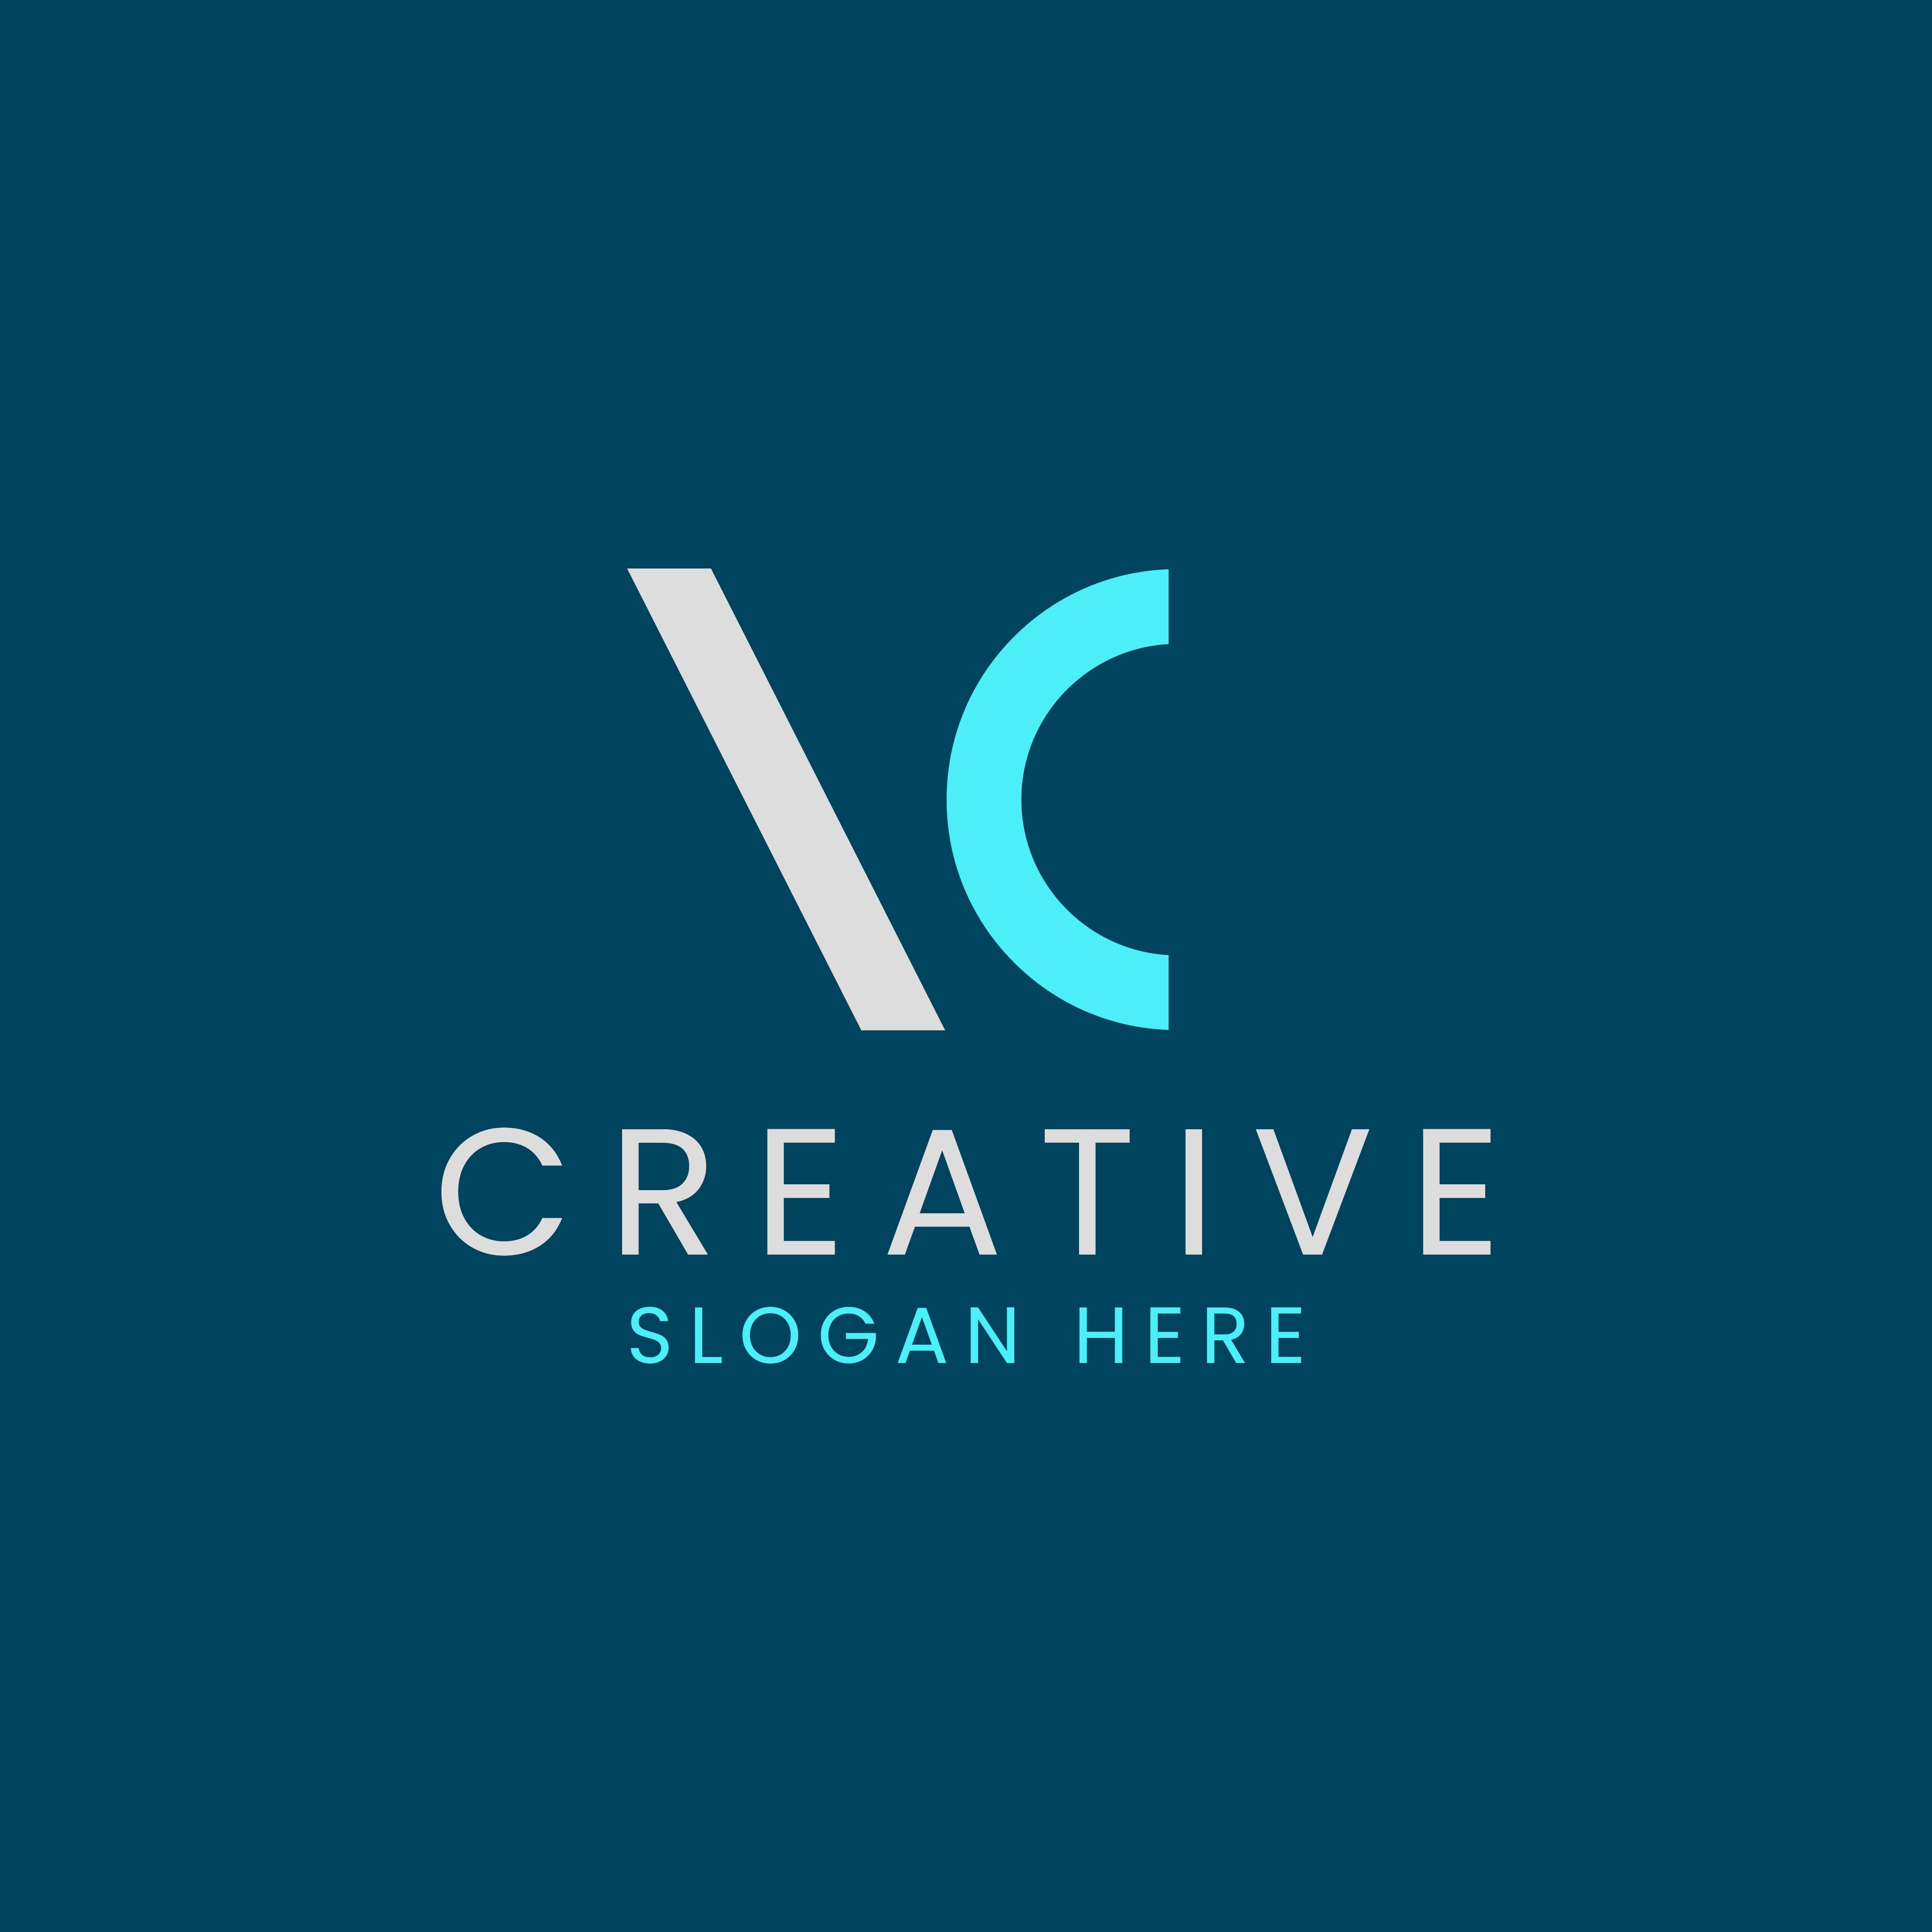 Creative Letter VC Logo Design Vector Image cover image.